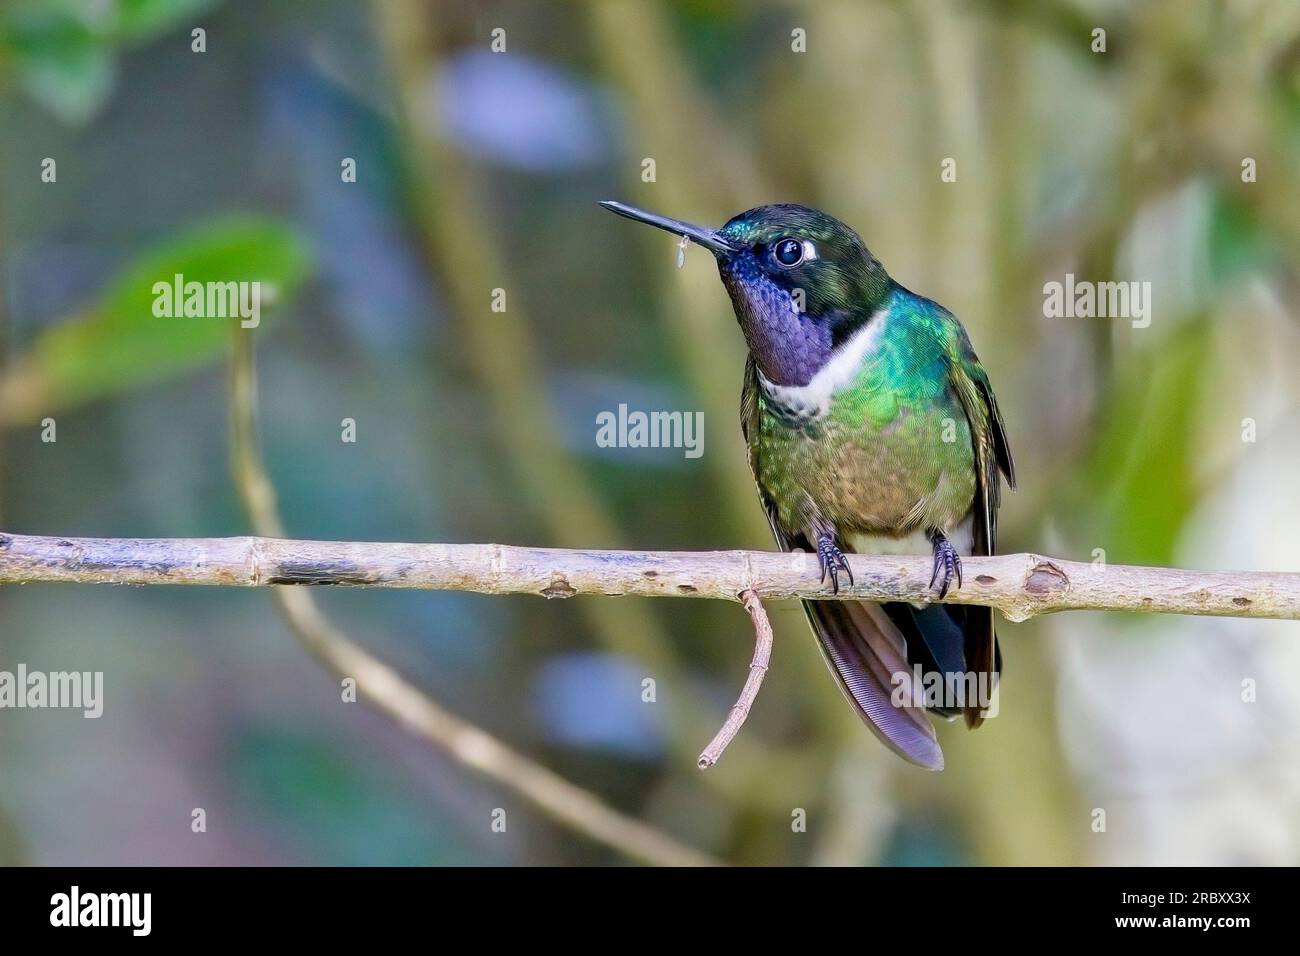 Longuemare's Sunangel hummingbird, (Heliangelus clarisse), perched on a branch, near Bogota, Colombia. Stock Photo